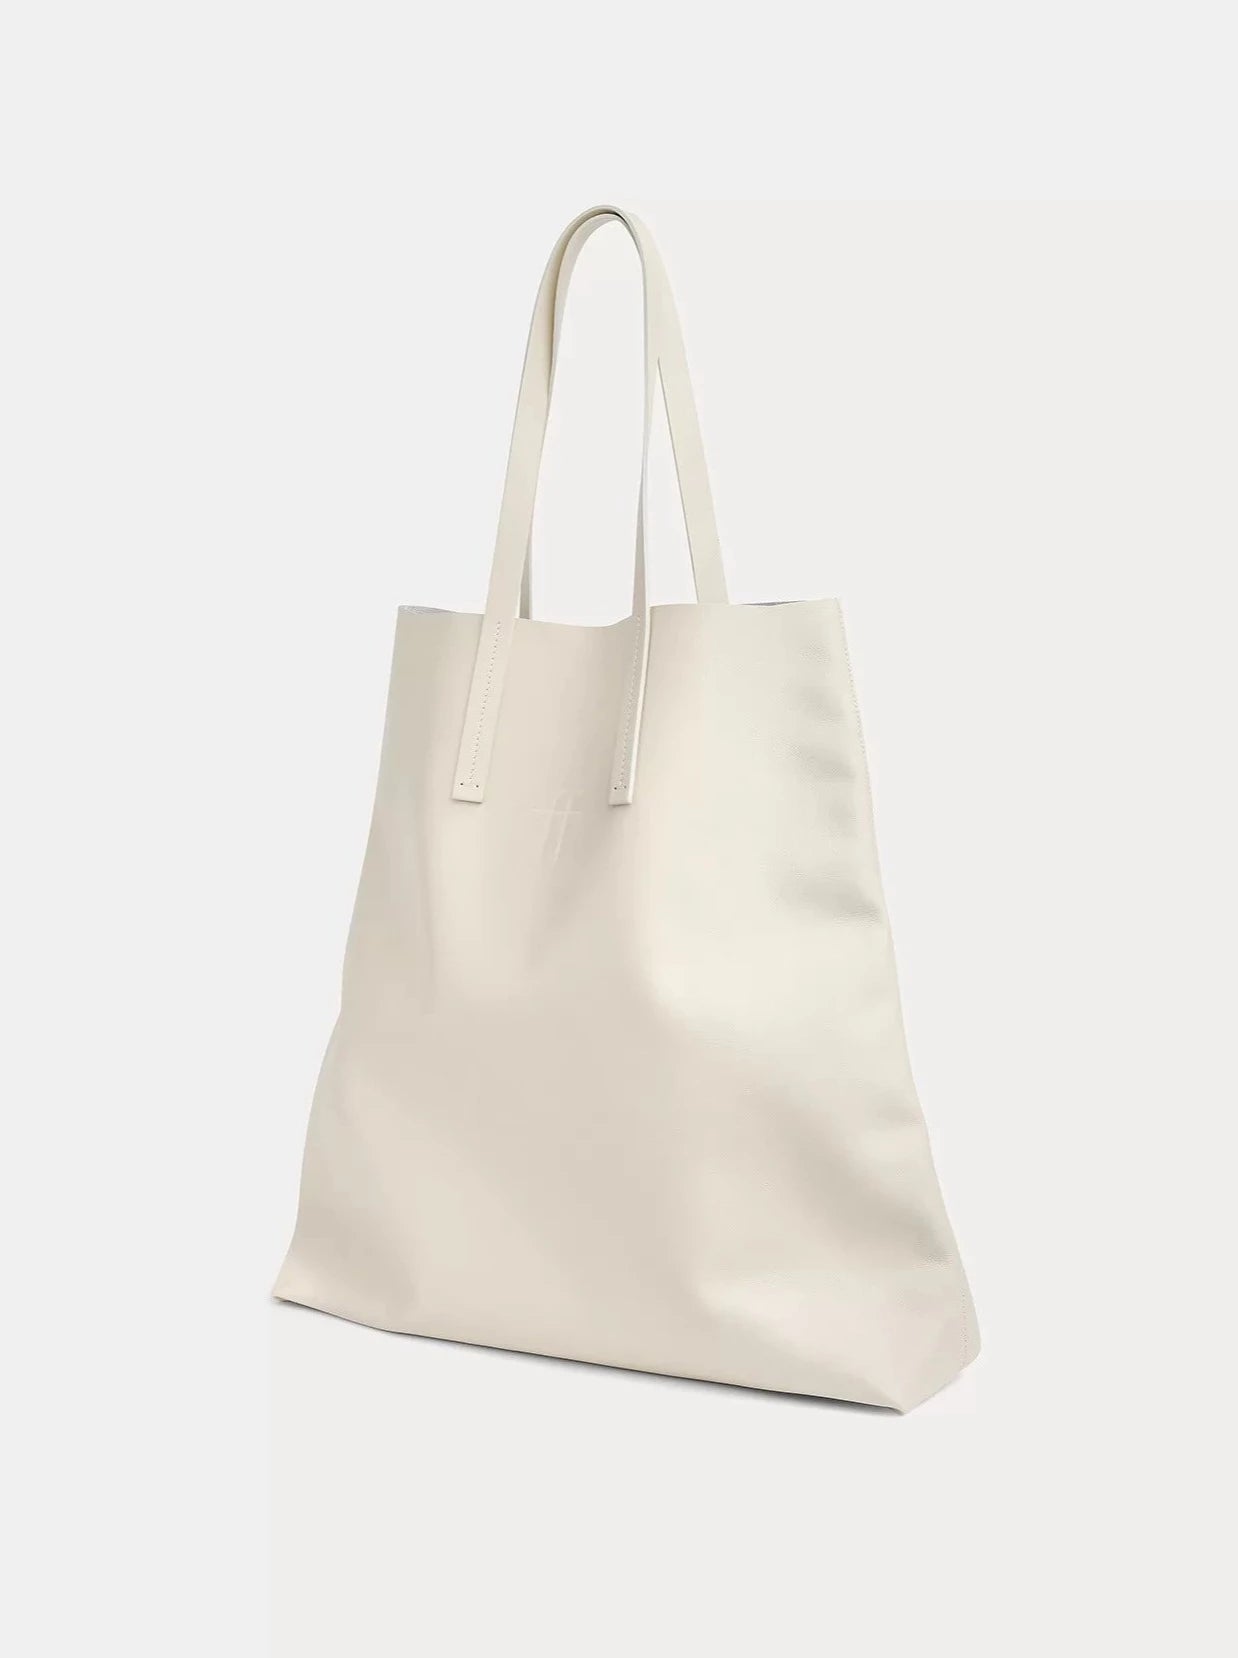 Maxi nappa leather shopping bag, ivory